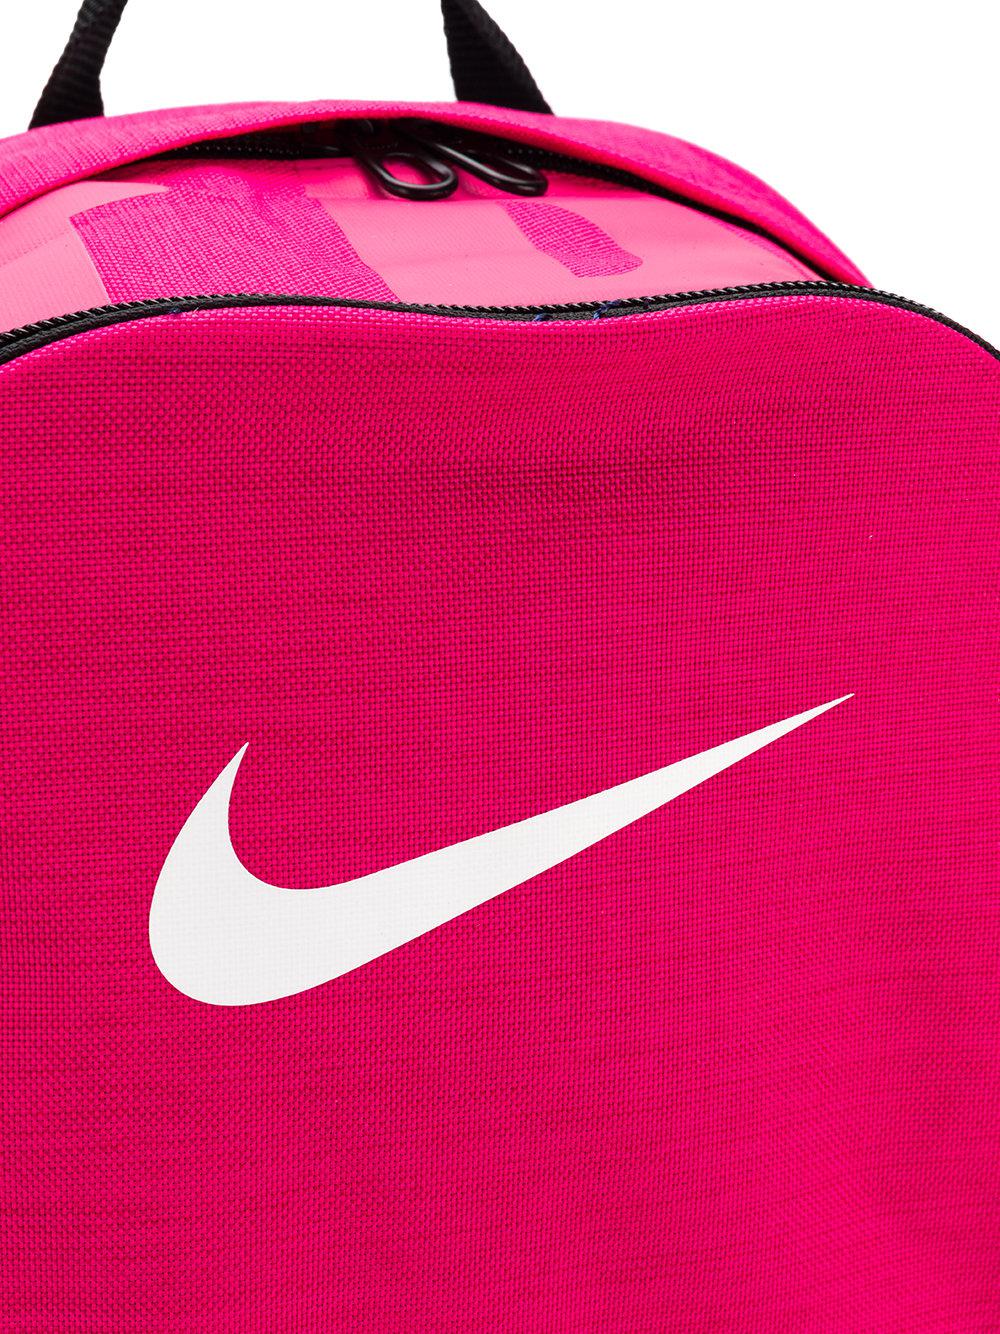 Nike Brasilia Backpack in Pink & Purple (Pink) for Men - Lyst